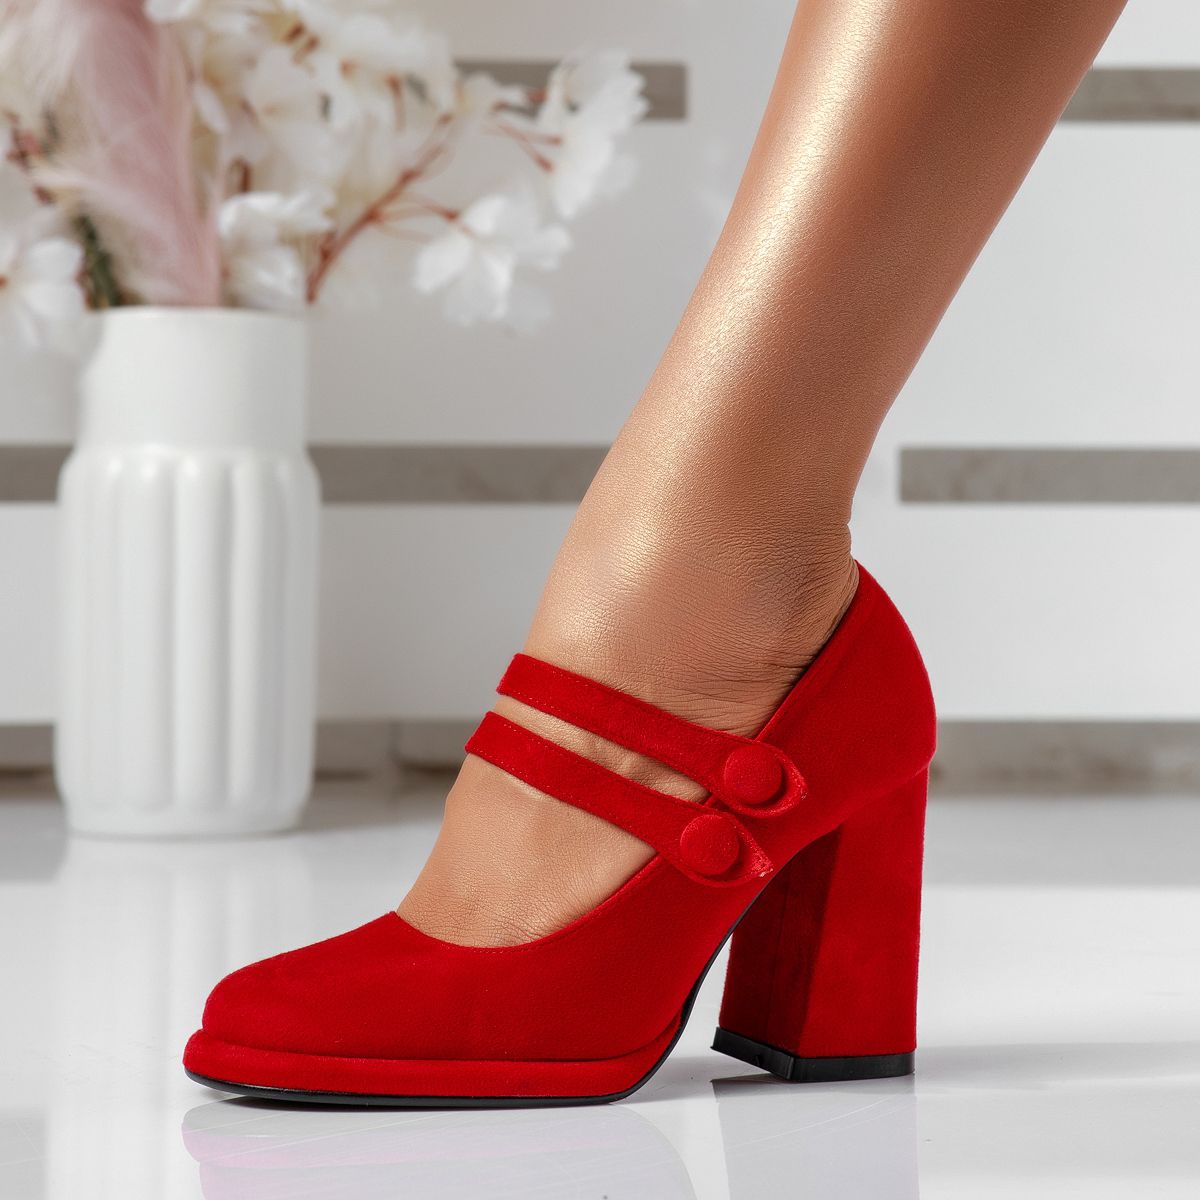 Pantofi Dama cu Toc Amelia2 Rosii #16679